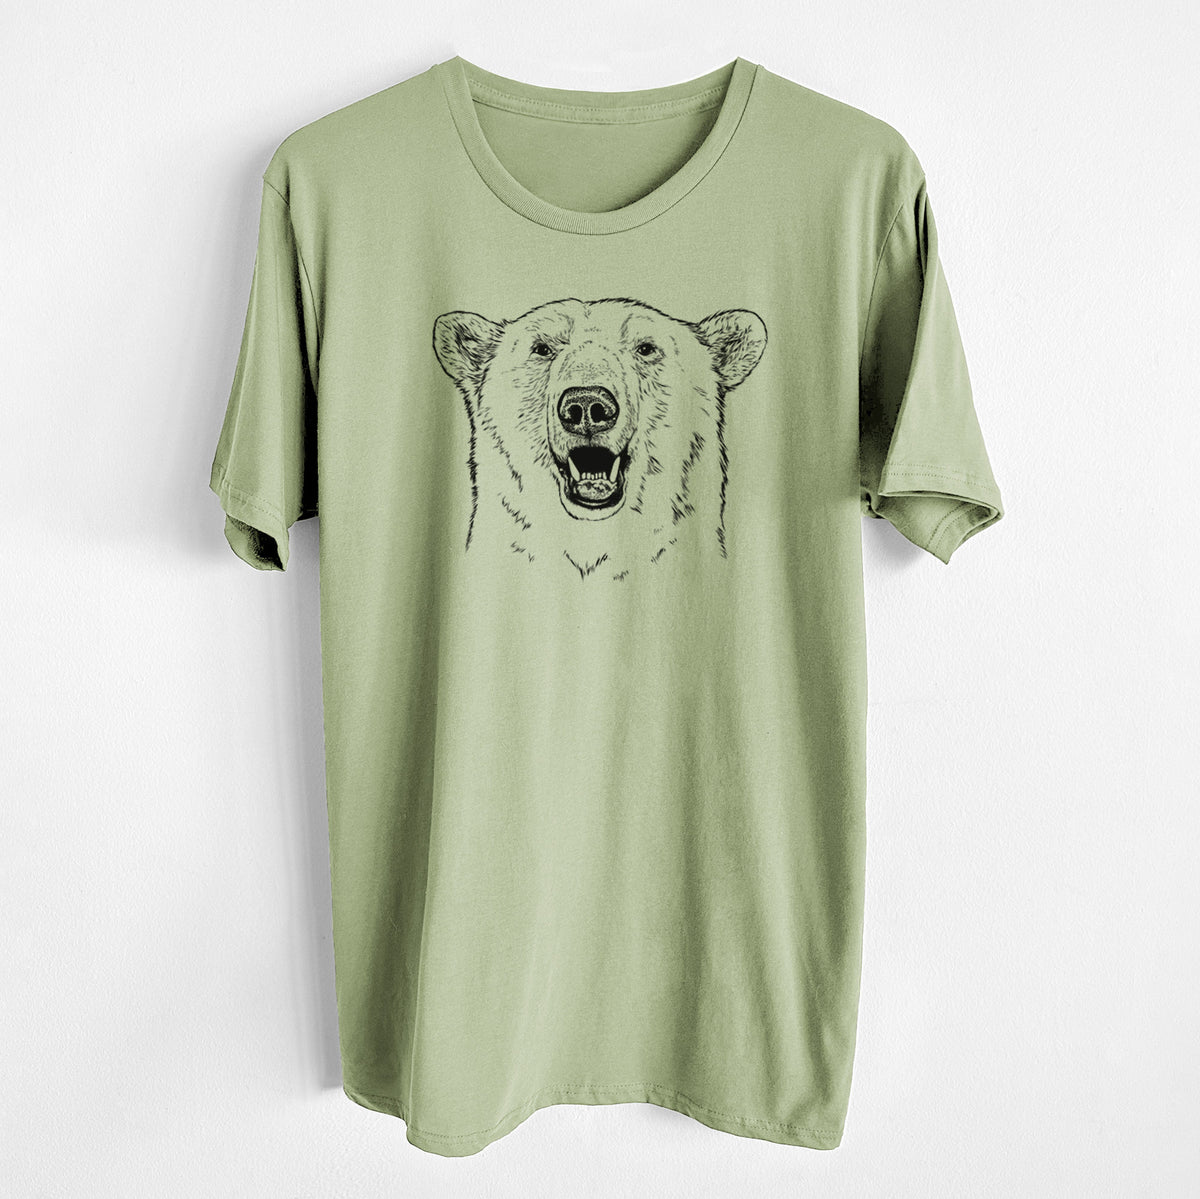 Ursus Maritimus - Polar Bear - Unisex Crewneck - Made in USA - 100% Organic Cotton